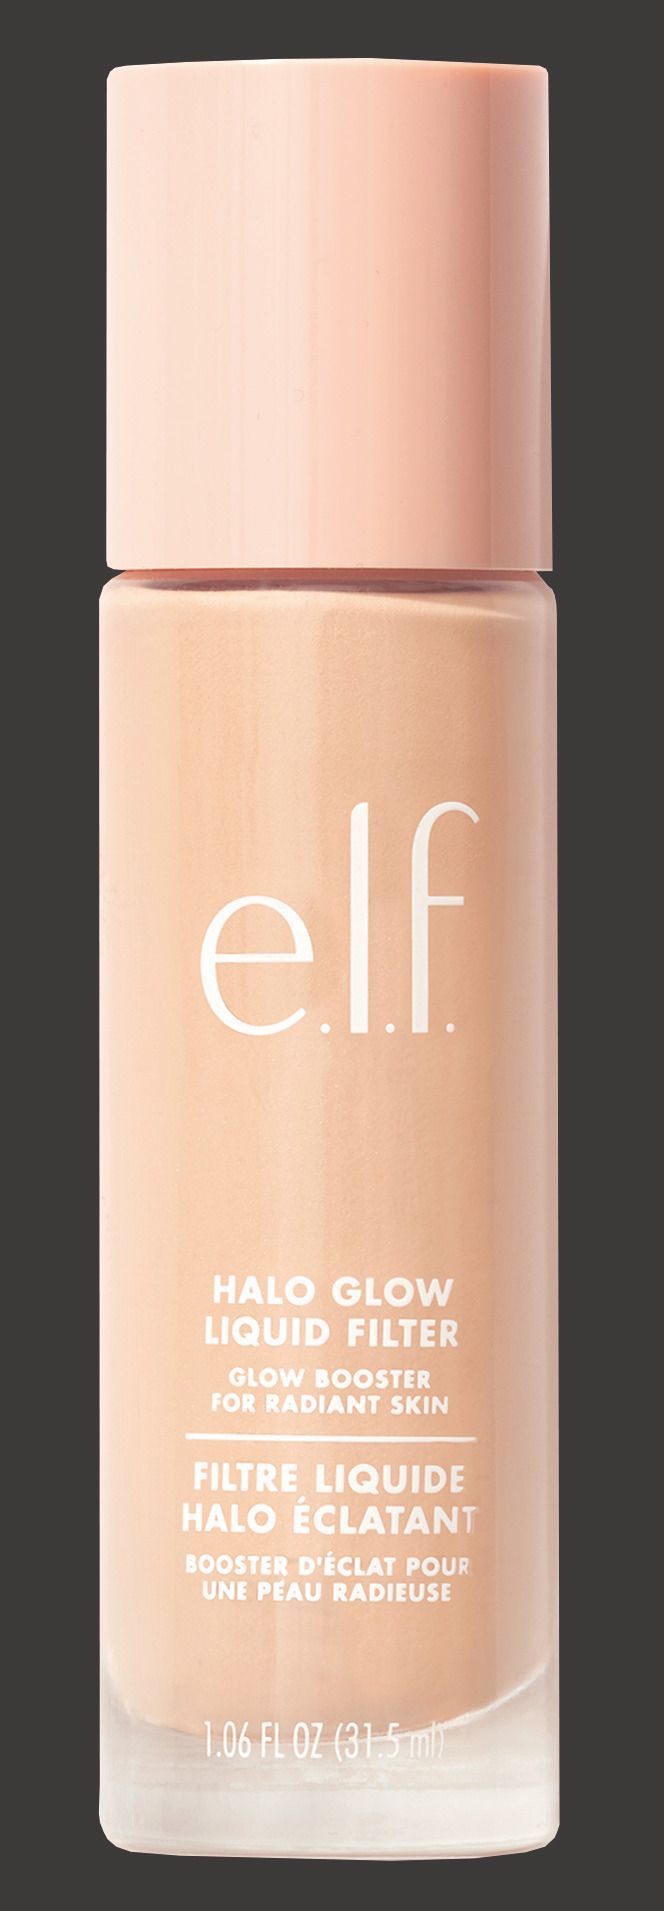 E.l.f. Halo Glow Liquid Filter